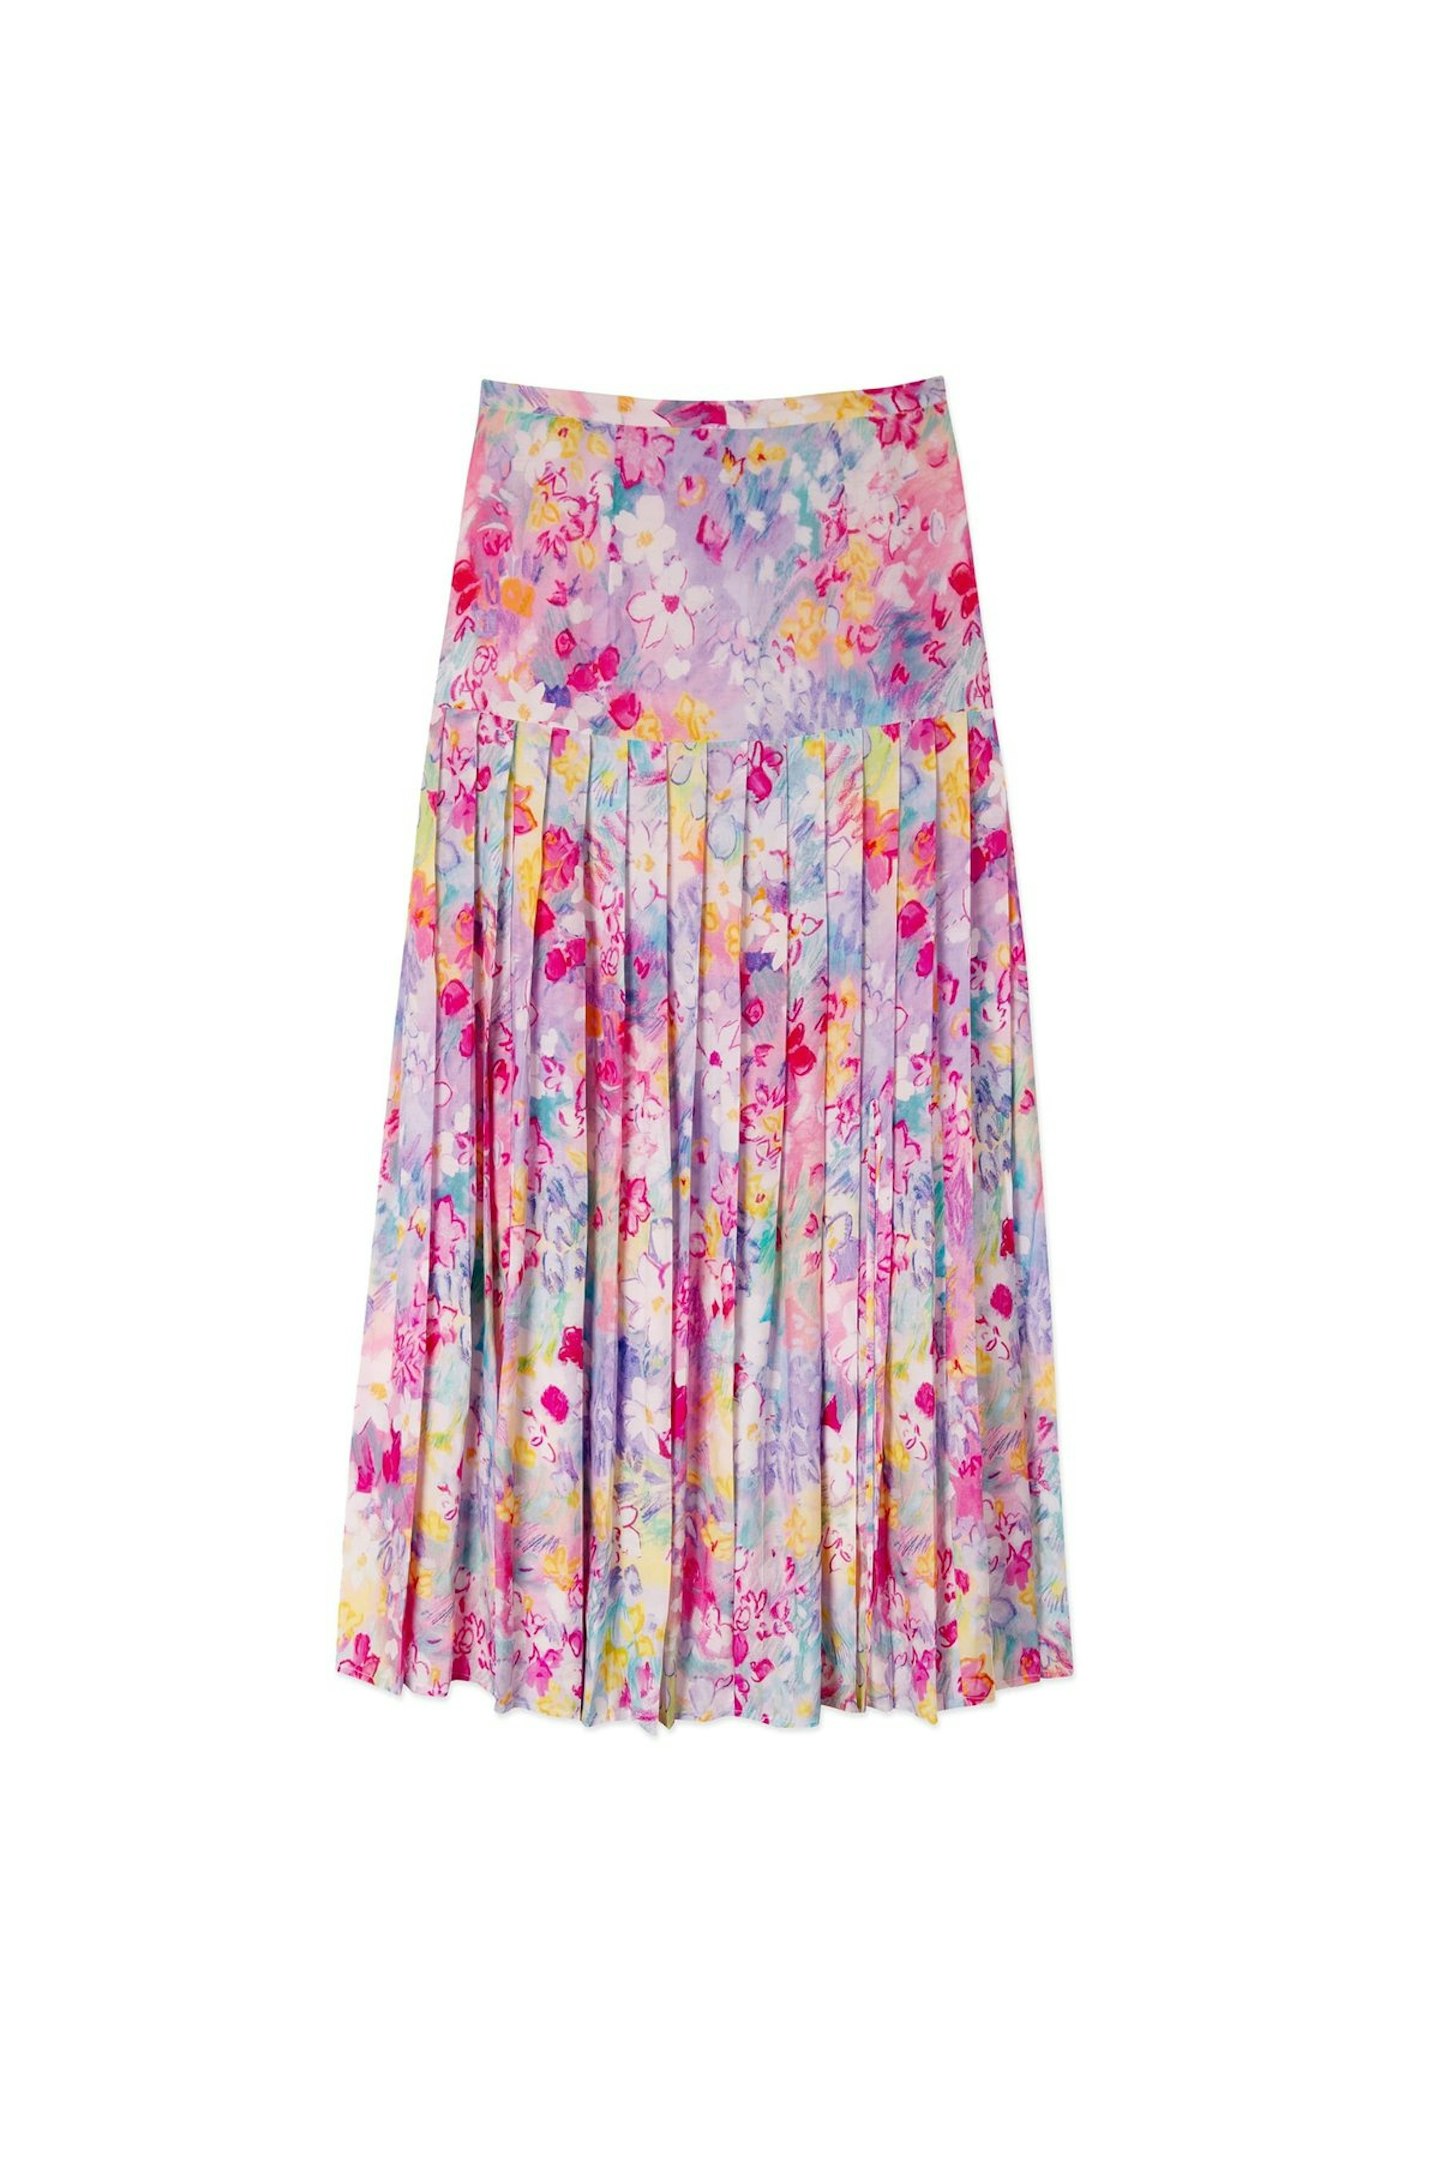 Rixo, Floral Print Midi Skirt, £215